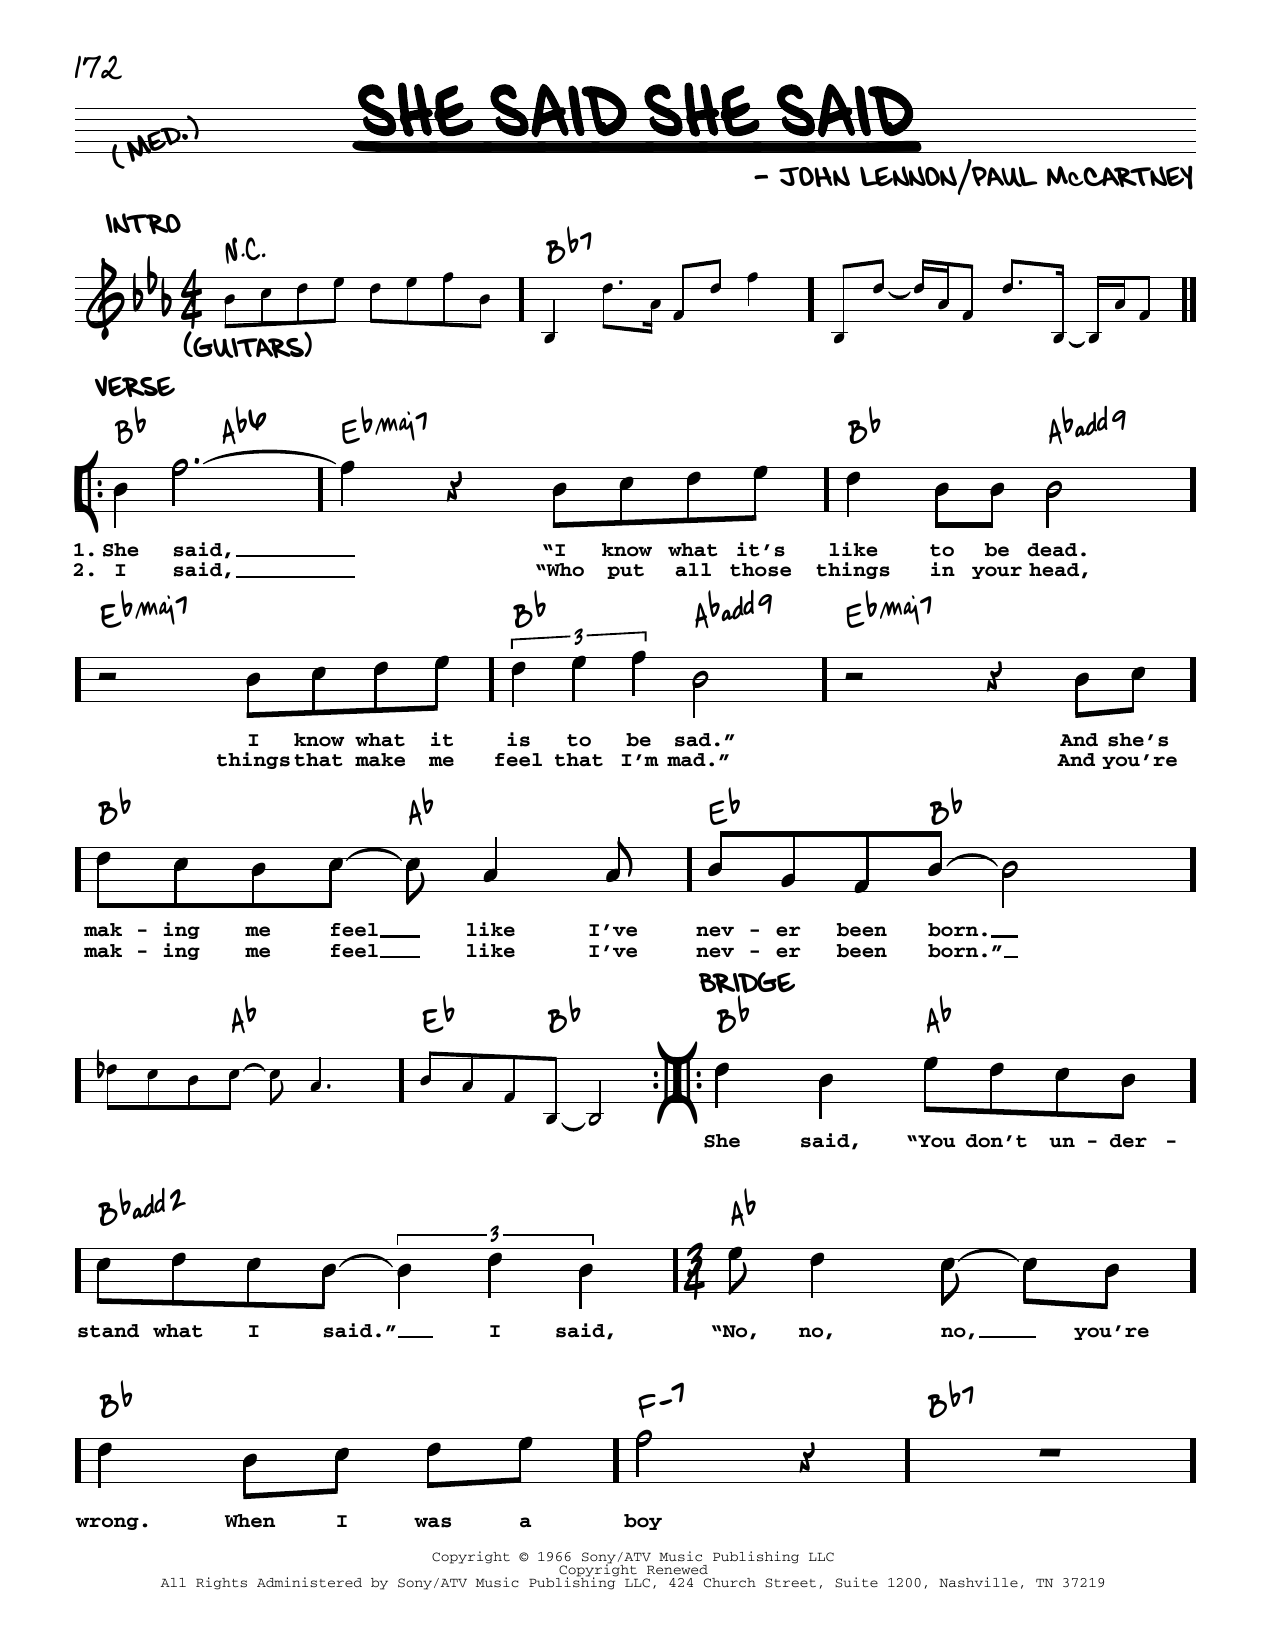 The Beatles She Said She Said [Jazz version] Sheet Music Notes & Chords for Real Book – Melody, Lyrics & Chords - Download or Print PDF